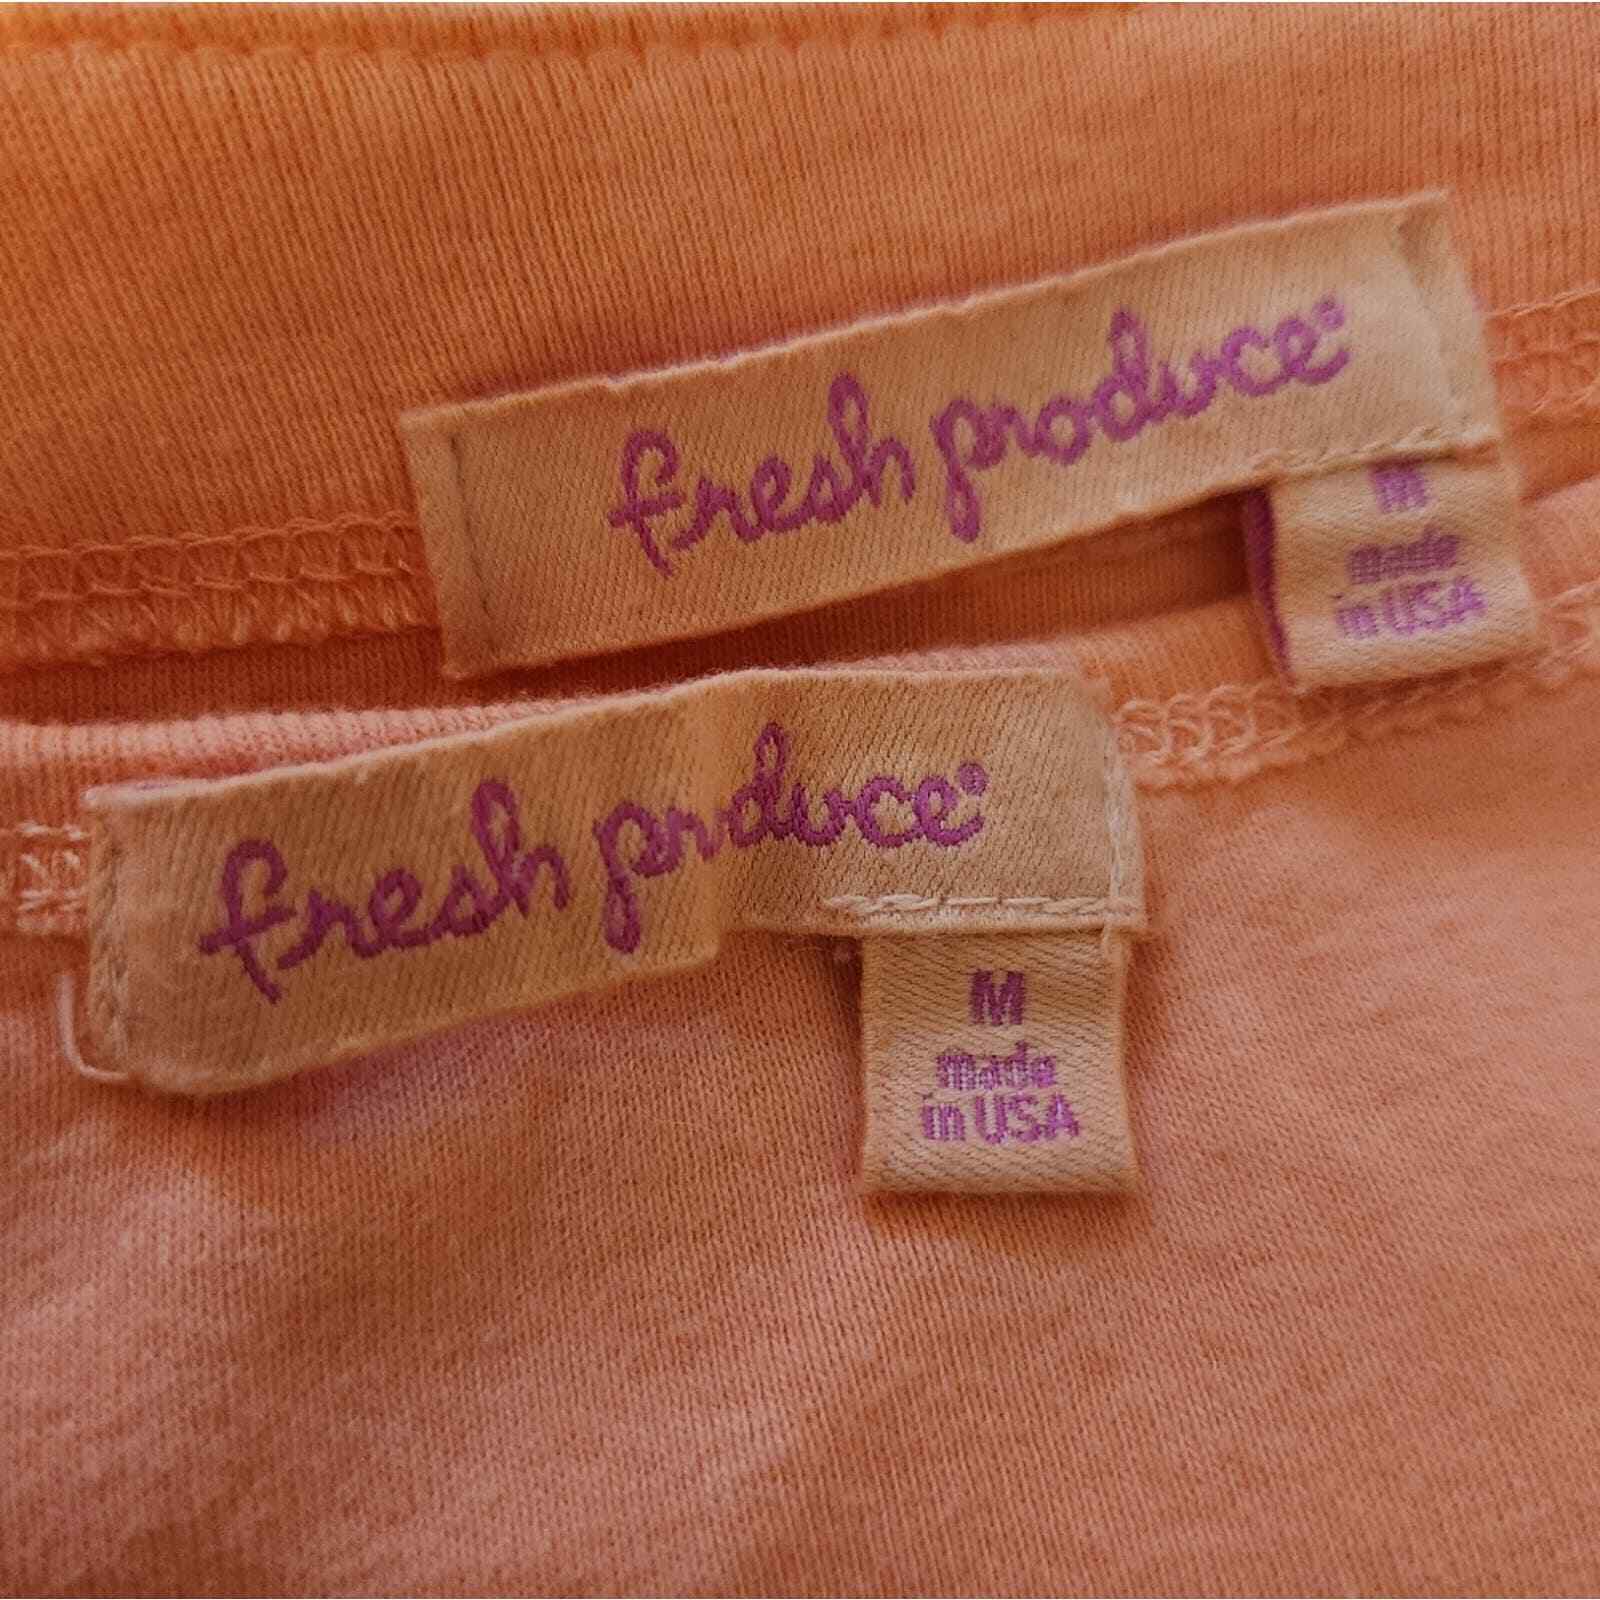 Fresh Produce Twin set cradigan & tank pearl snap… - image 6